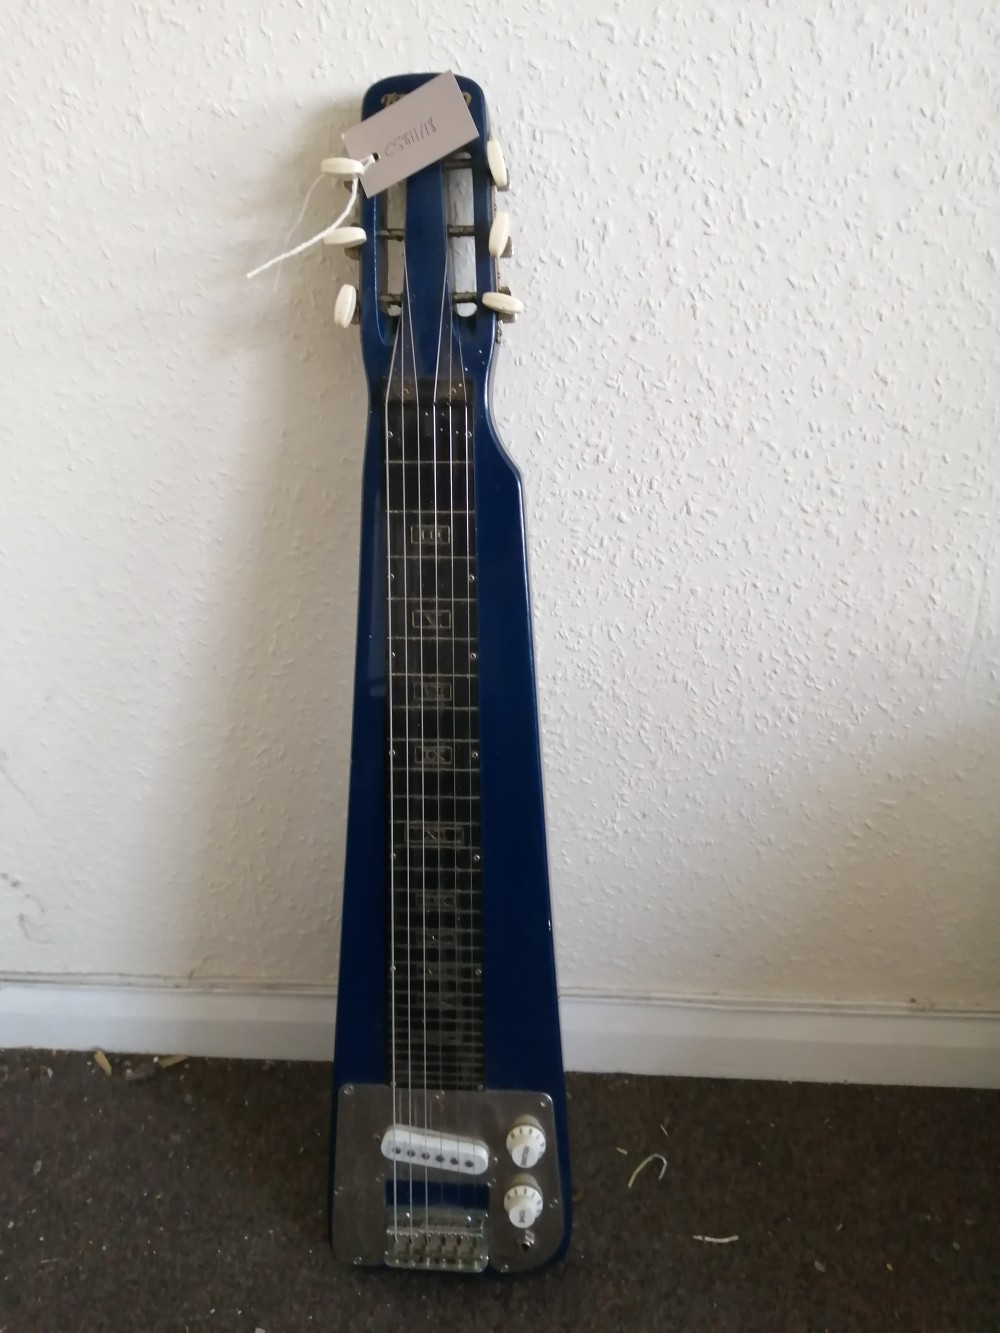 A Jagard Lap steel guitar